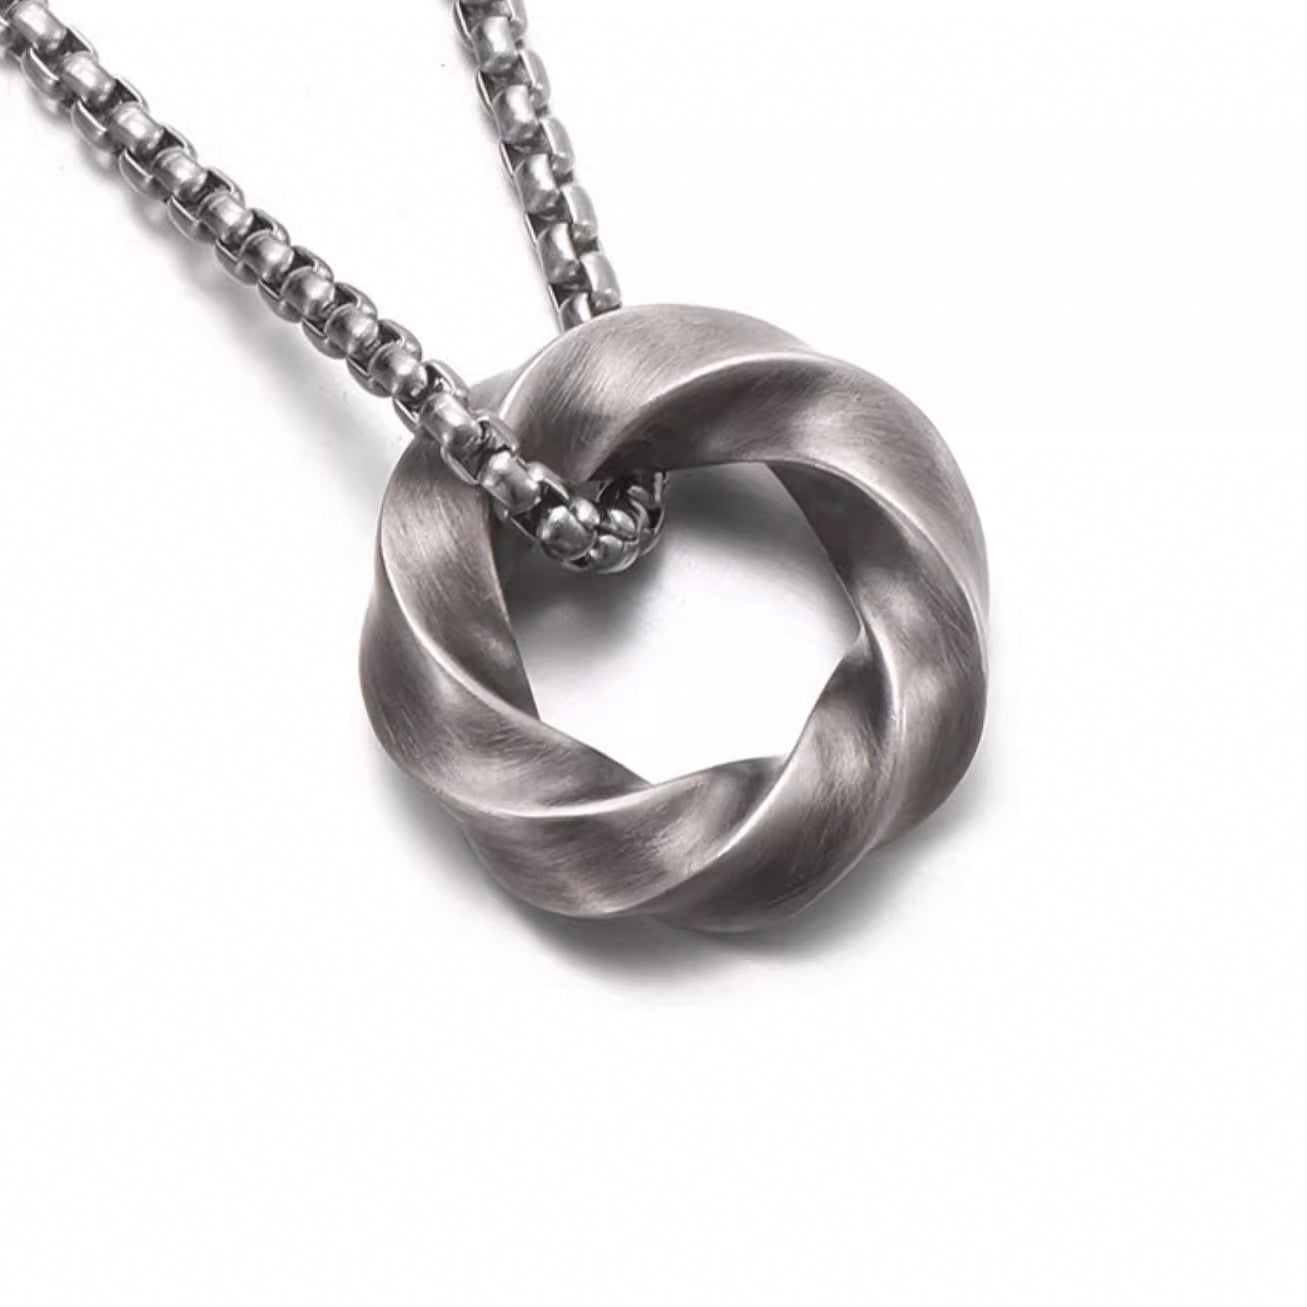 Möbius Twisted Ring Pendant